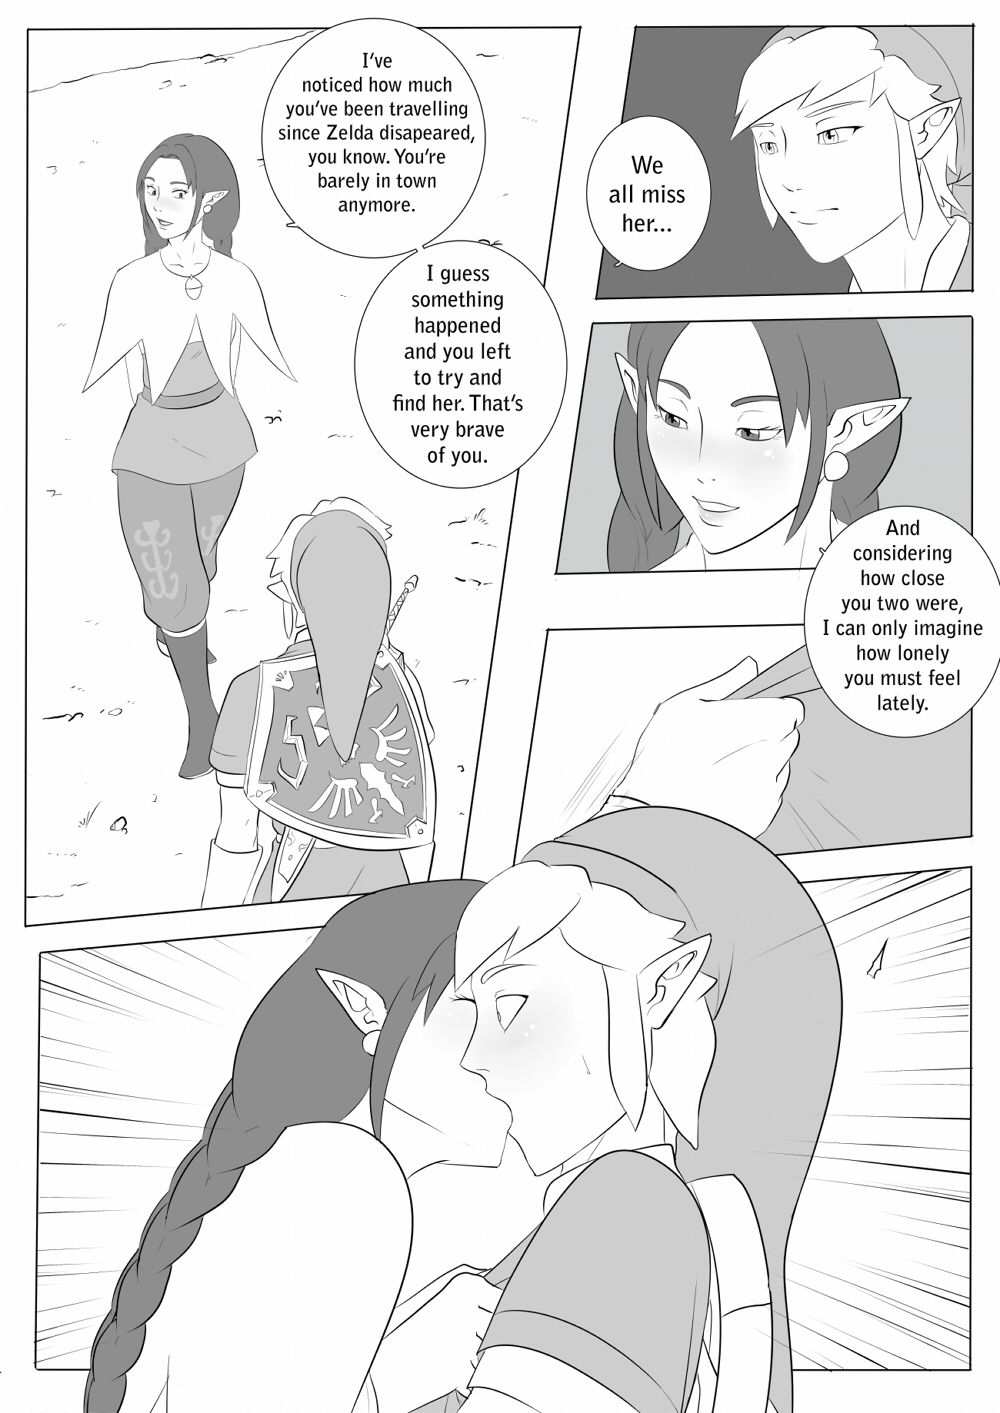 [Oo_Sebastian_oO] A Link Between Girls 1 - Orielle (The Legend of Zelda) [Ongoing] 5